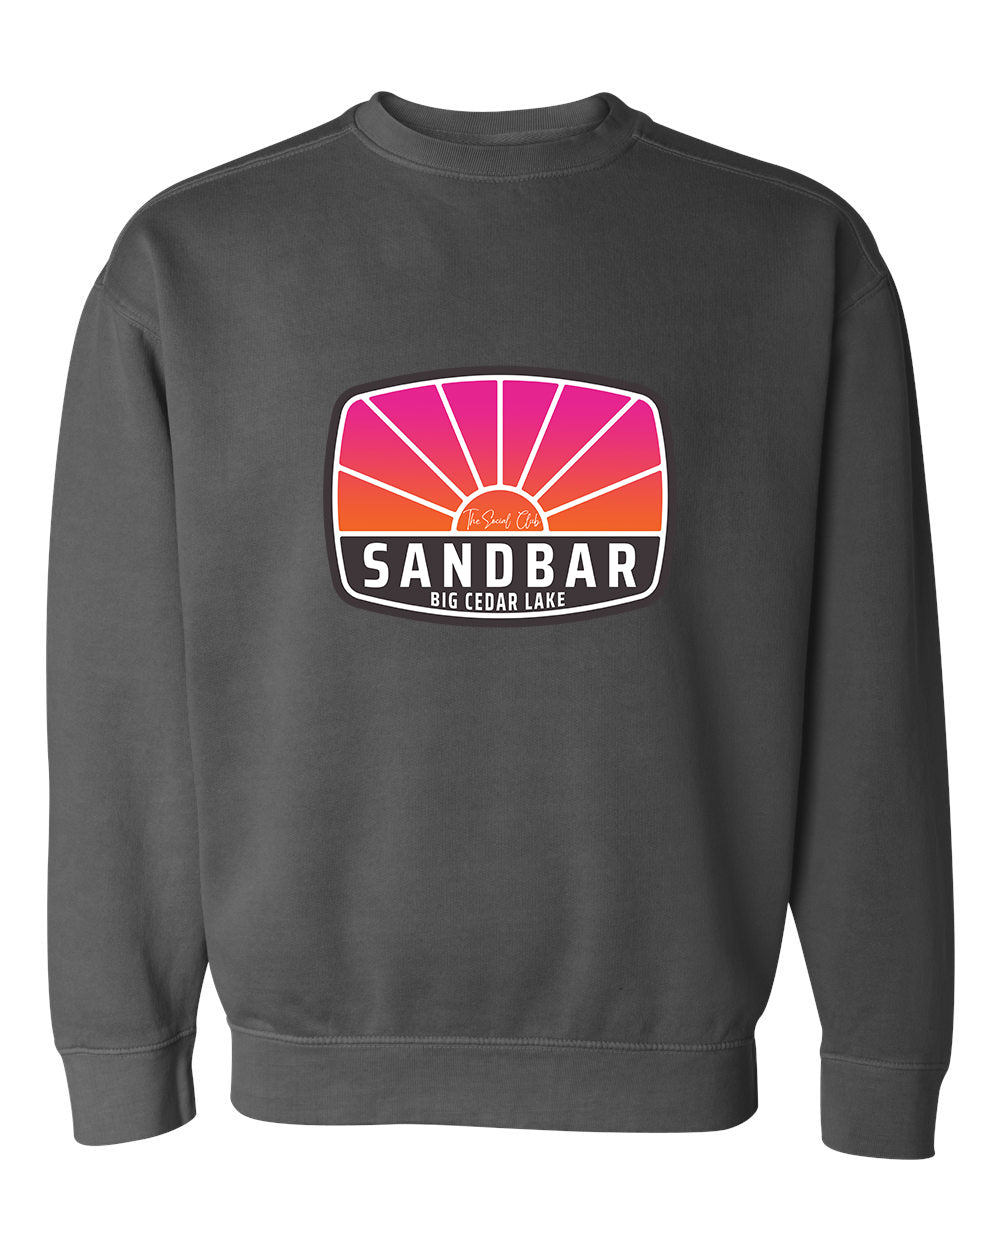 The Sandbar Sunset Crew